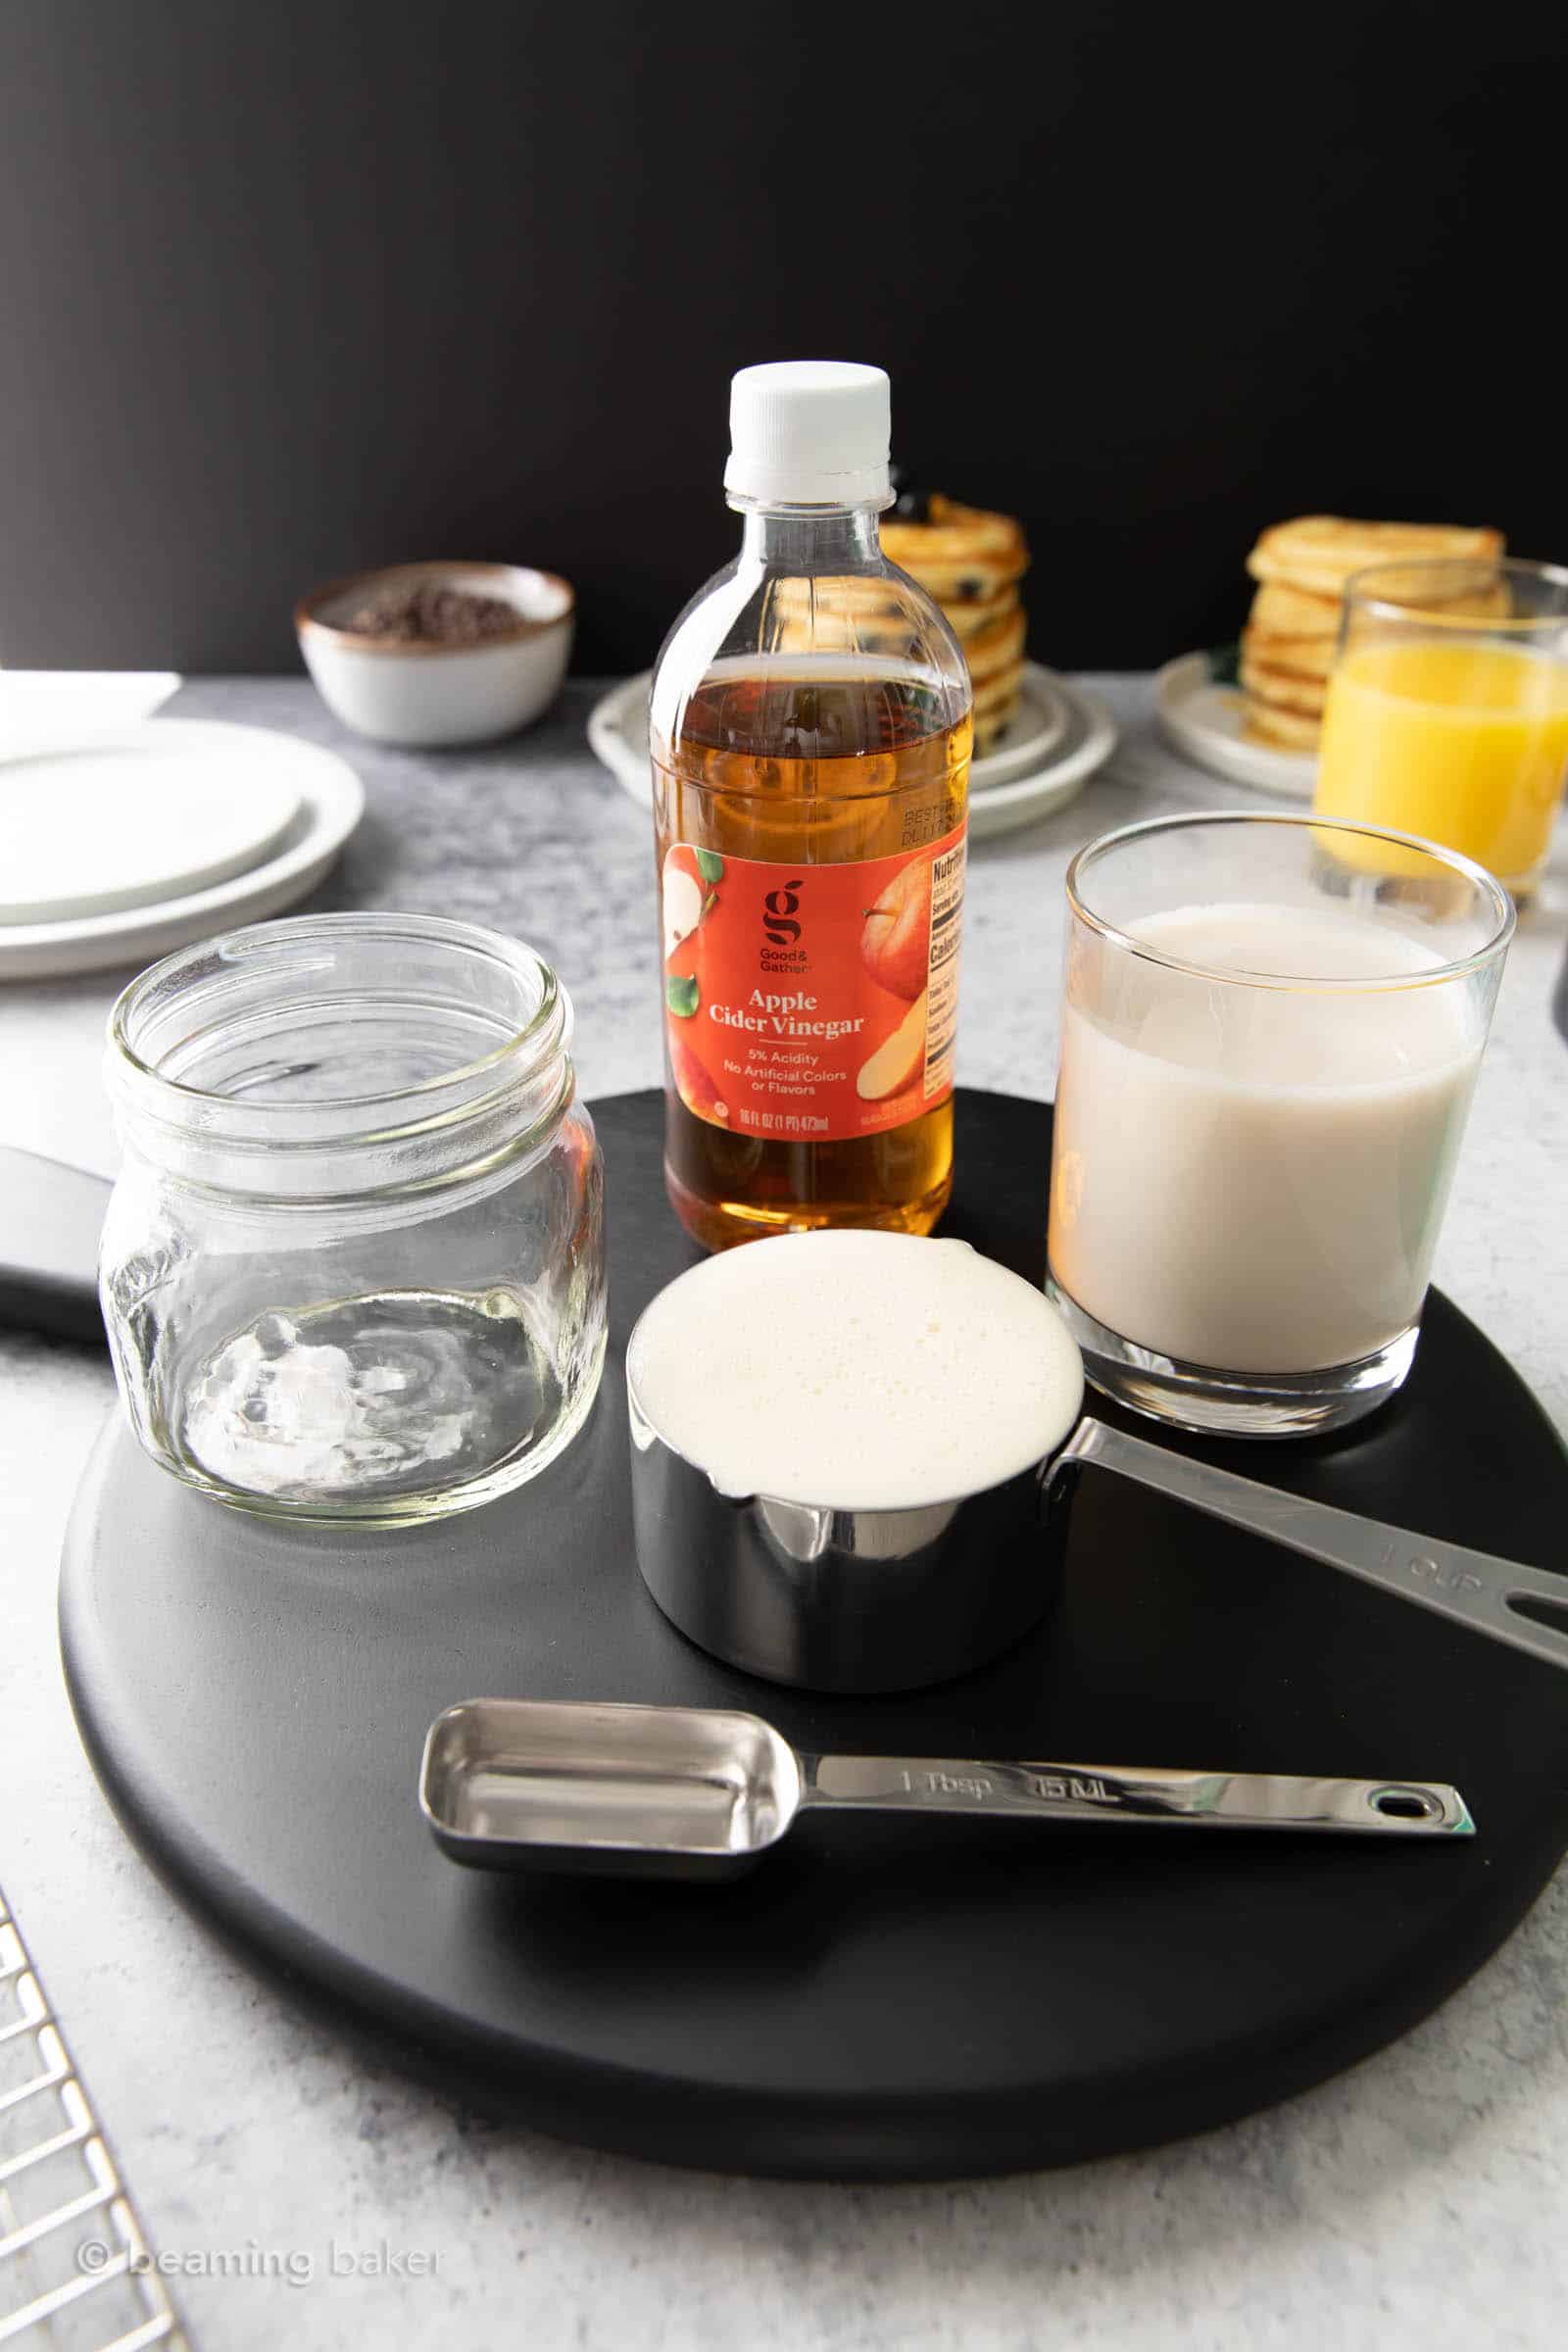 vegan buttermilk ingredients laid out on a black serving board, including apple cider vinegar and soy milk